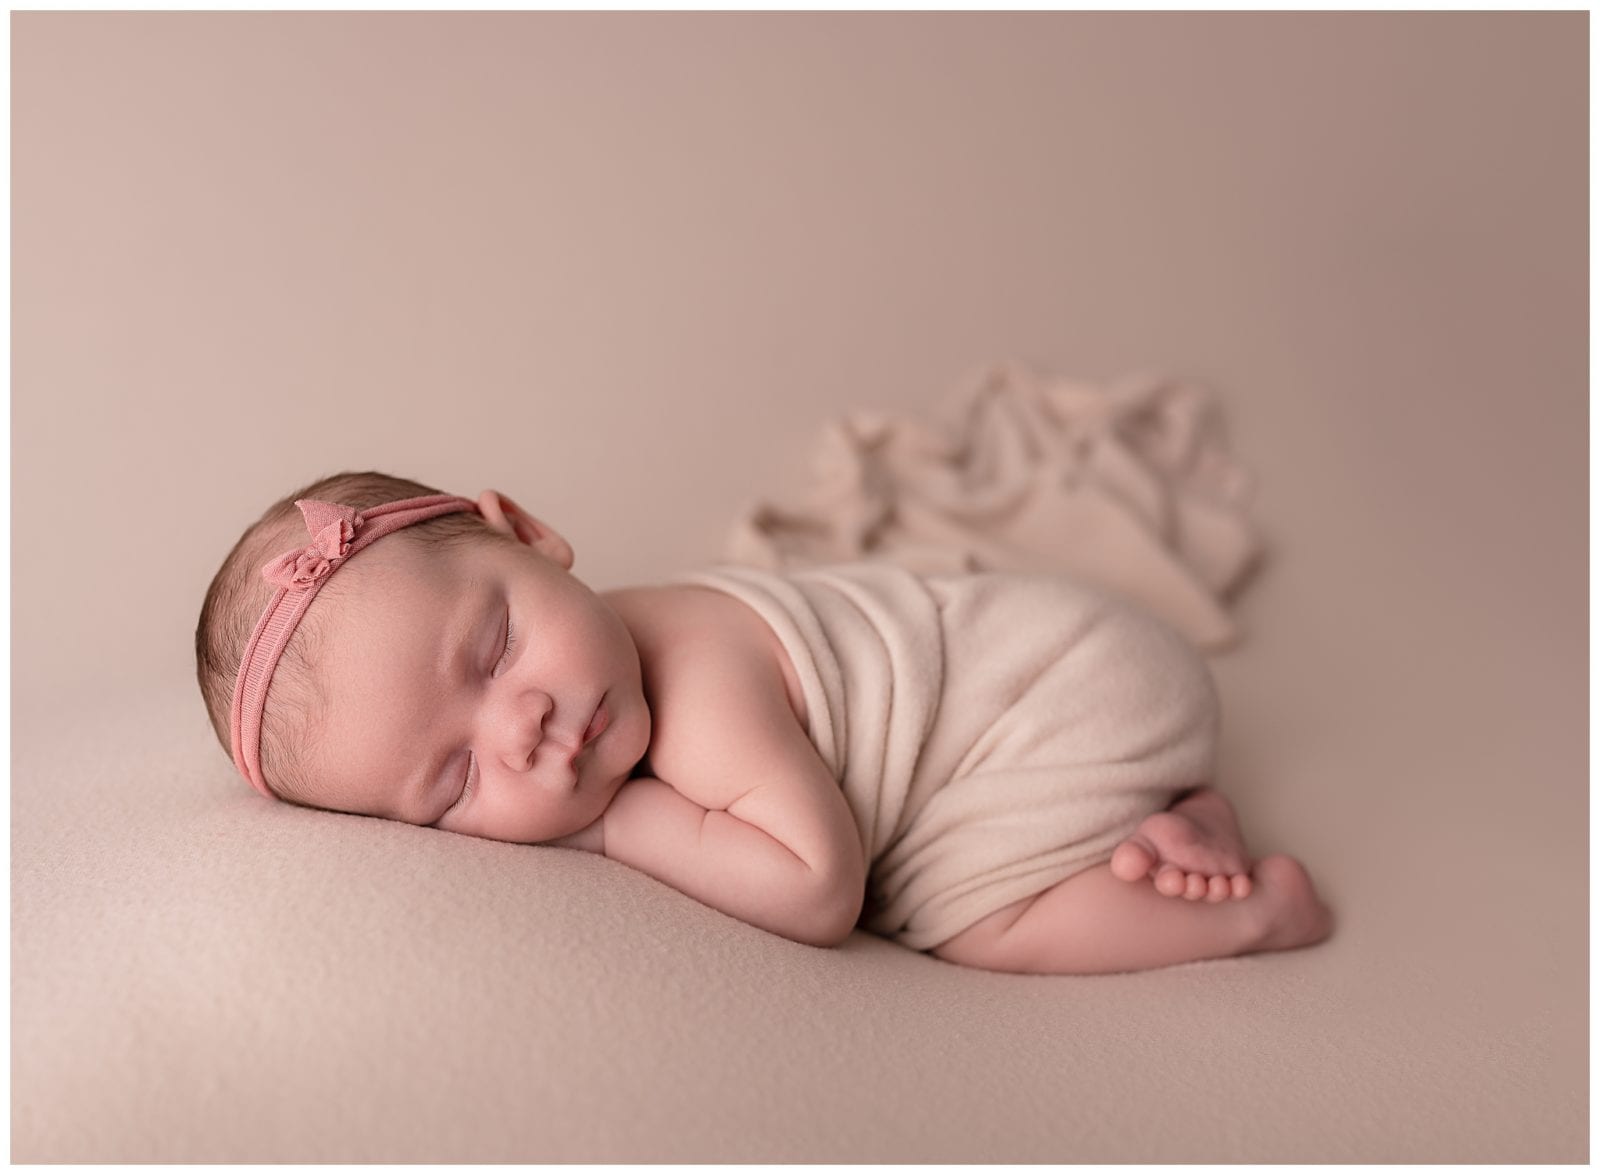 Newborn baby photo by Hello Photography